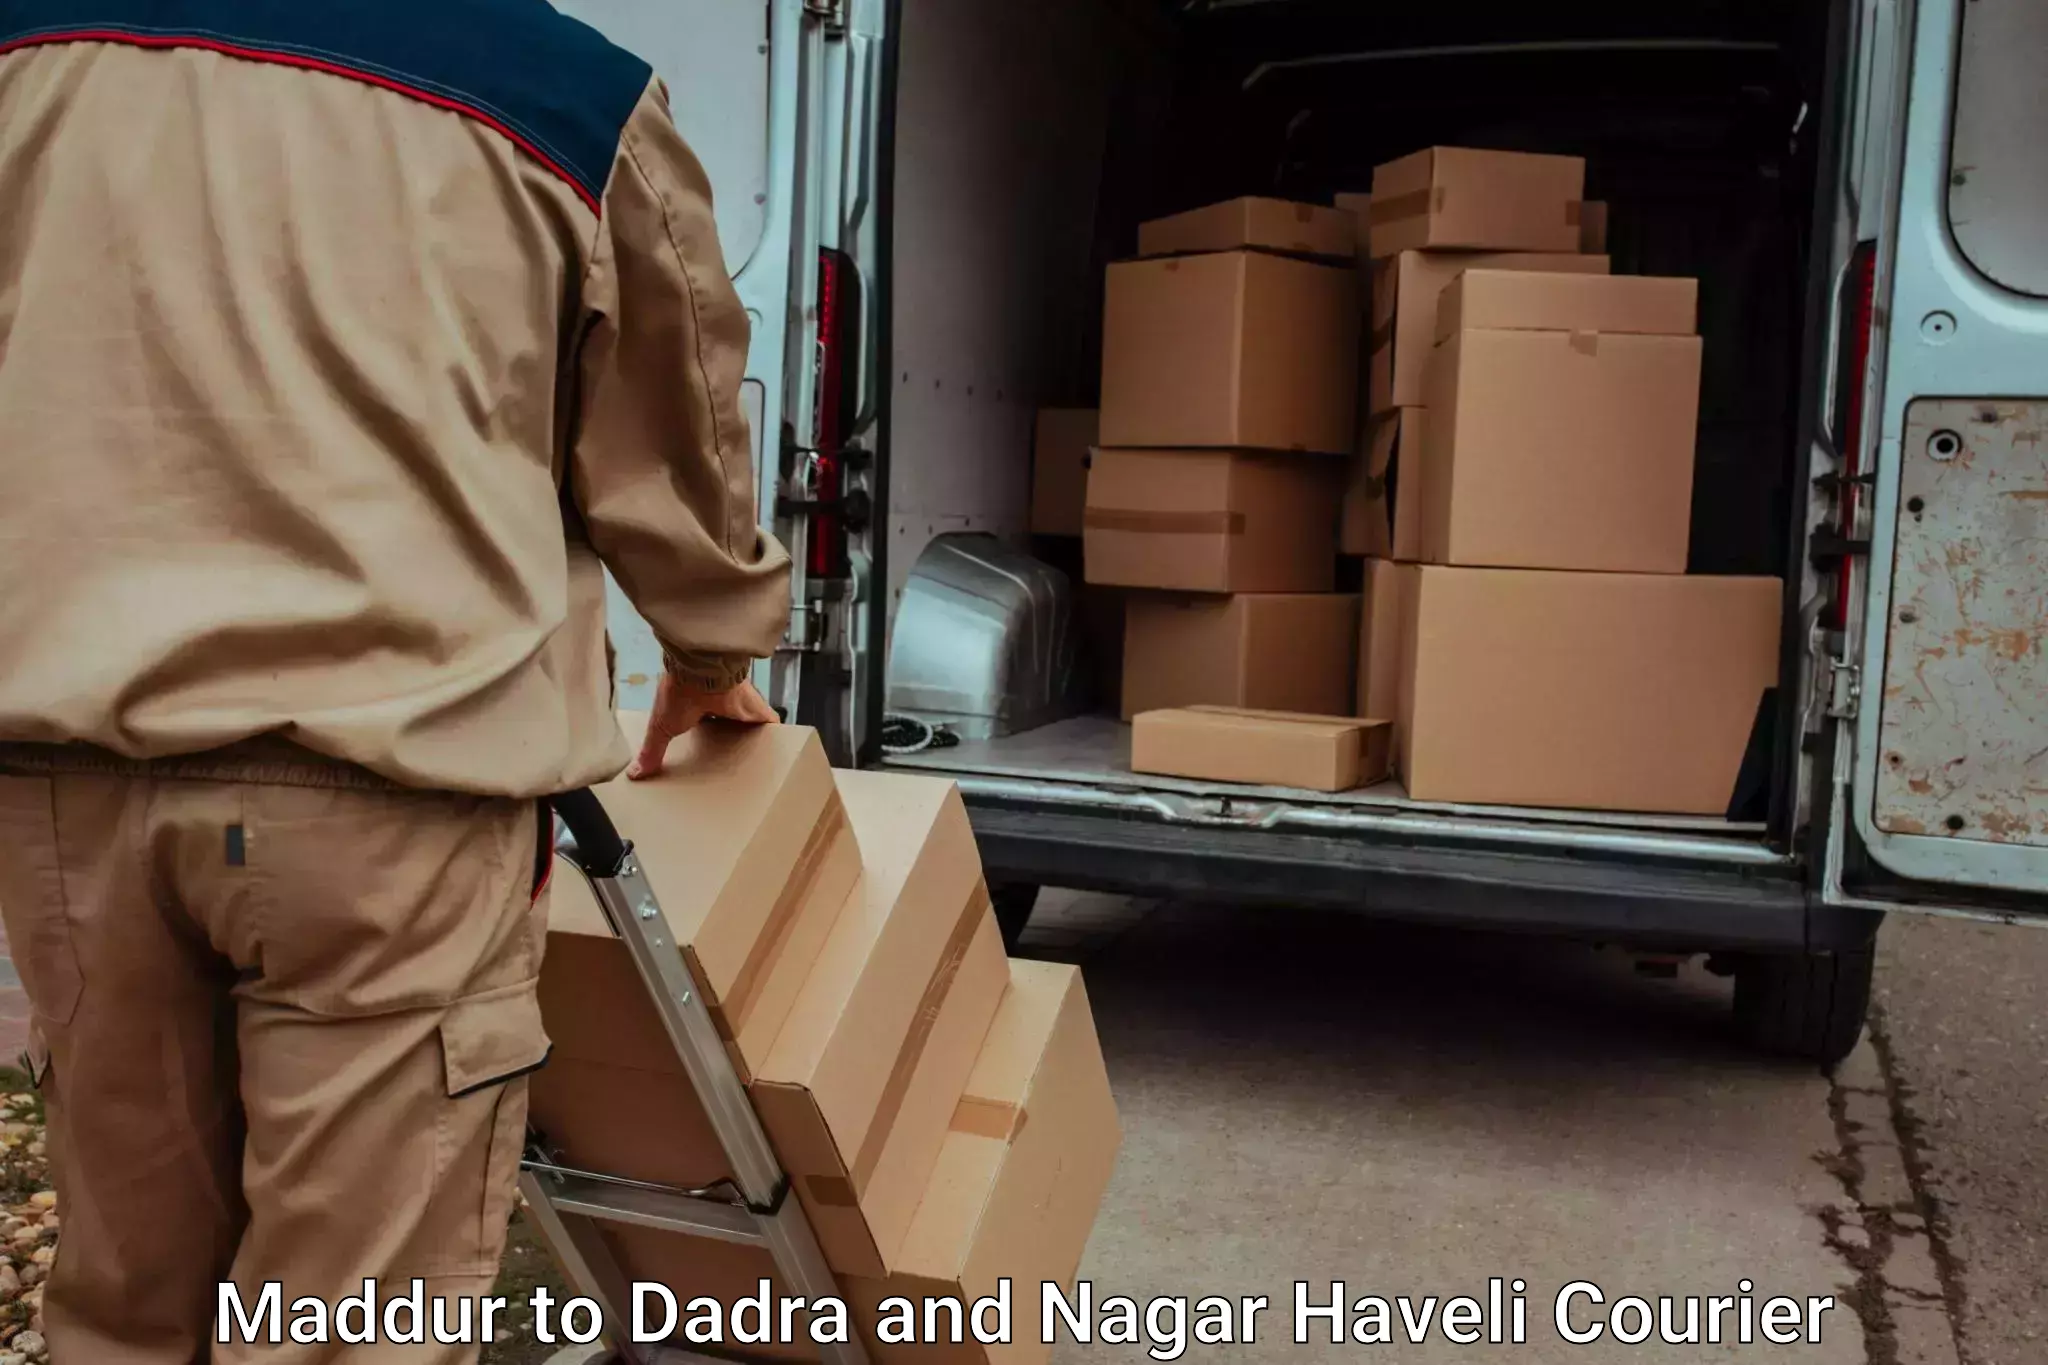 Furniture moving experts Maddur to Dadra and Nagar Haveli